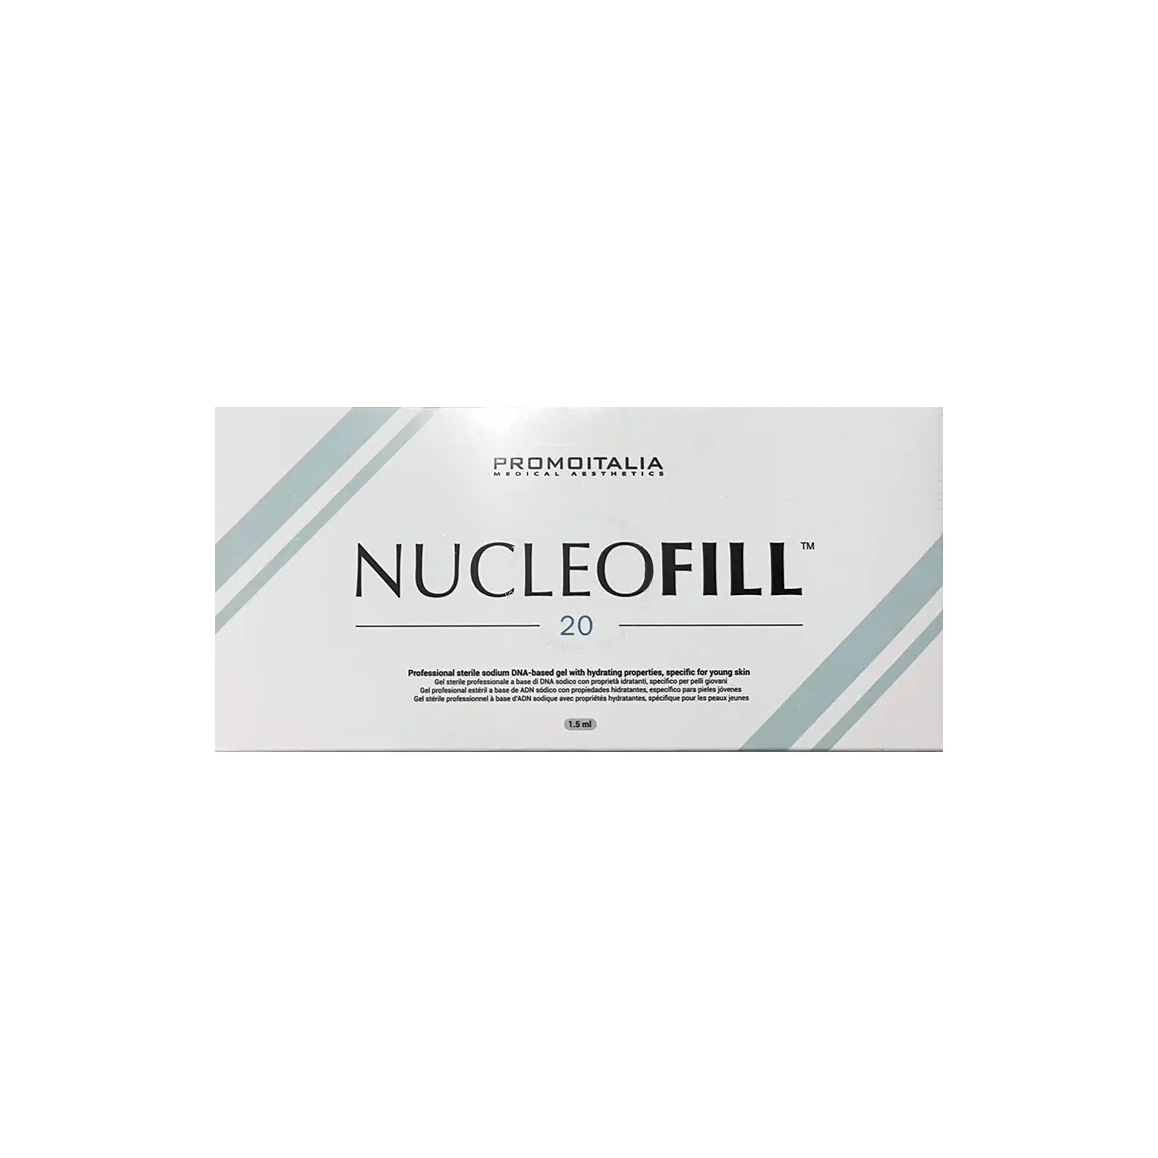 Nucleofill 20 2% 1.5ml Syringe